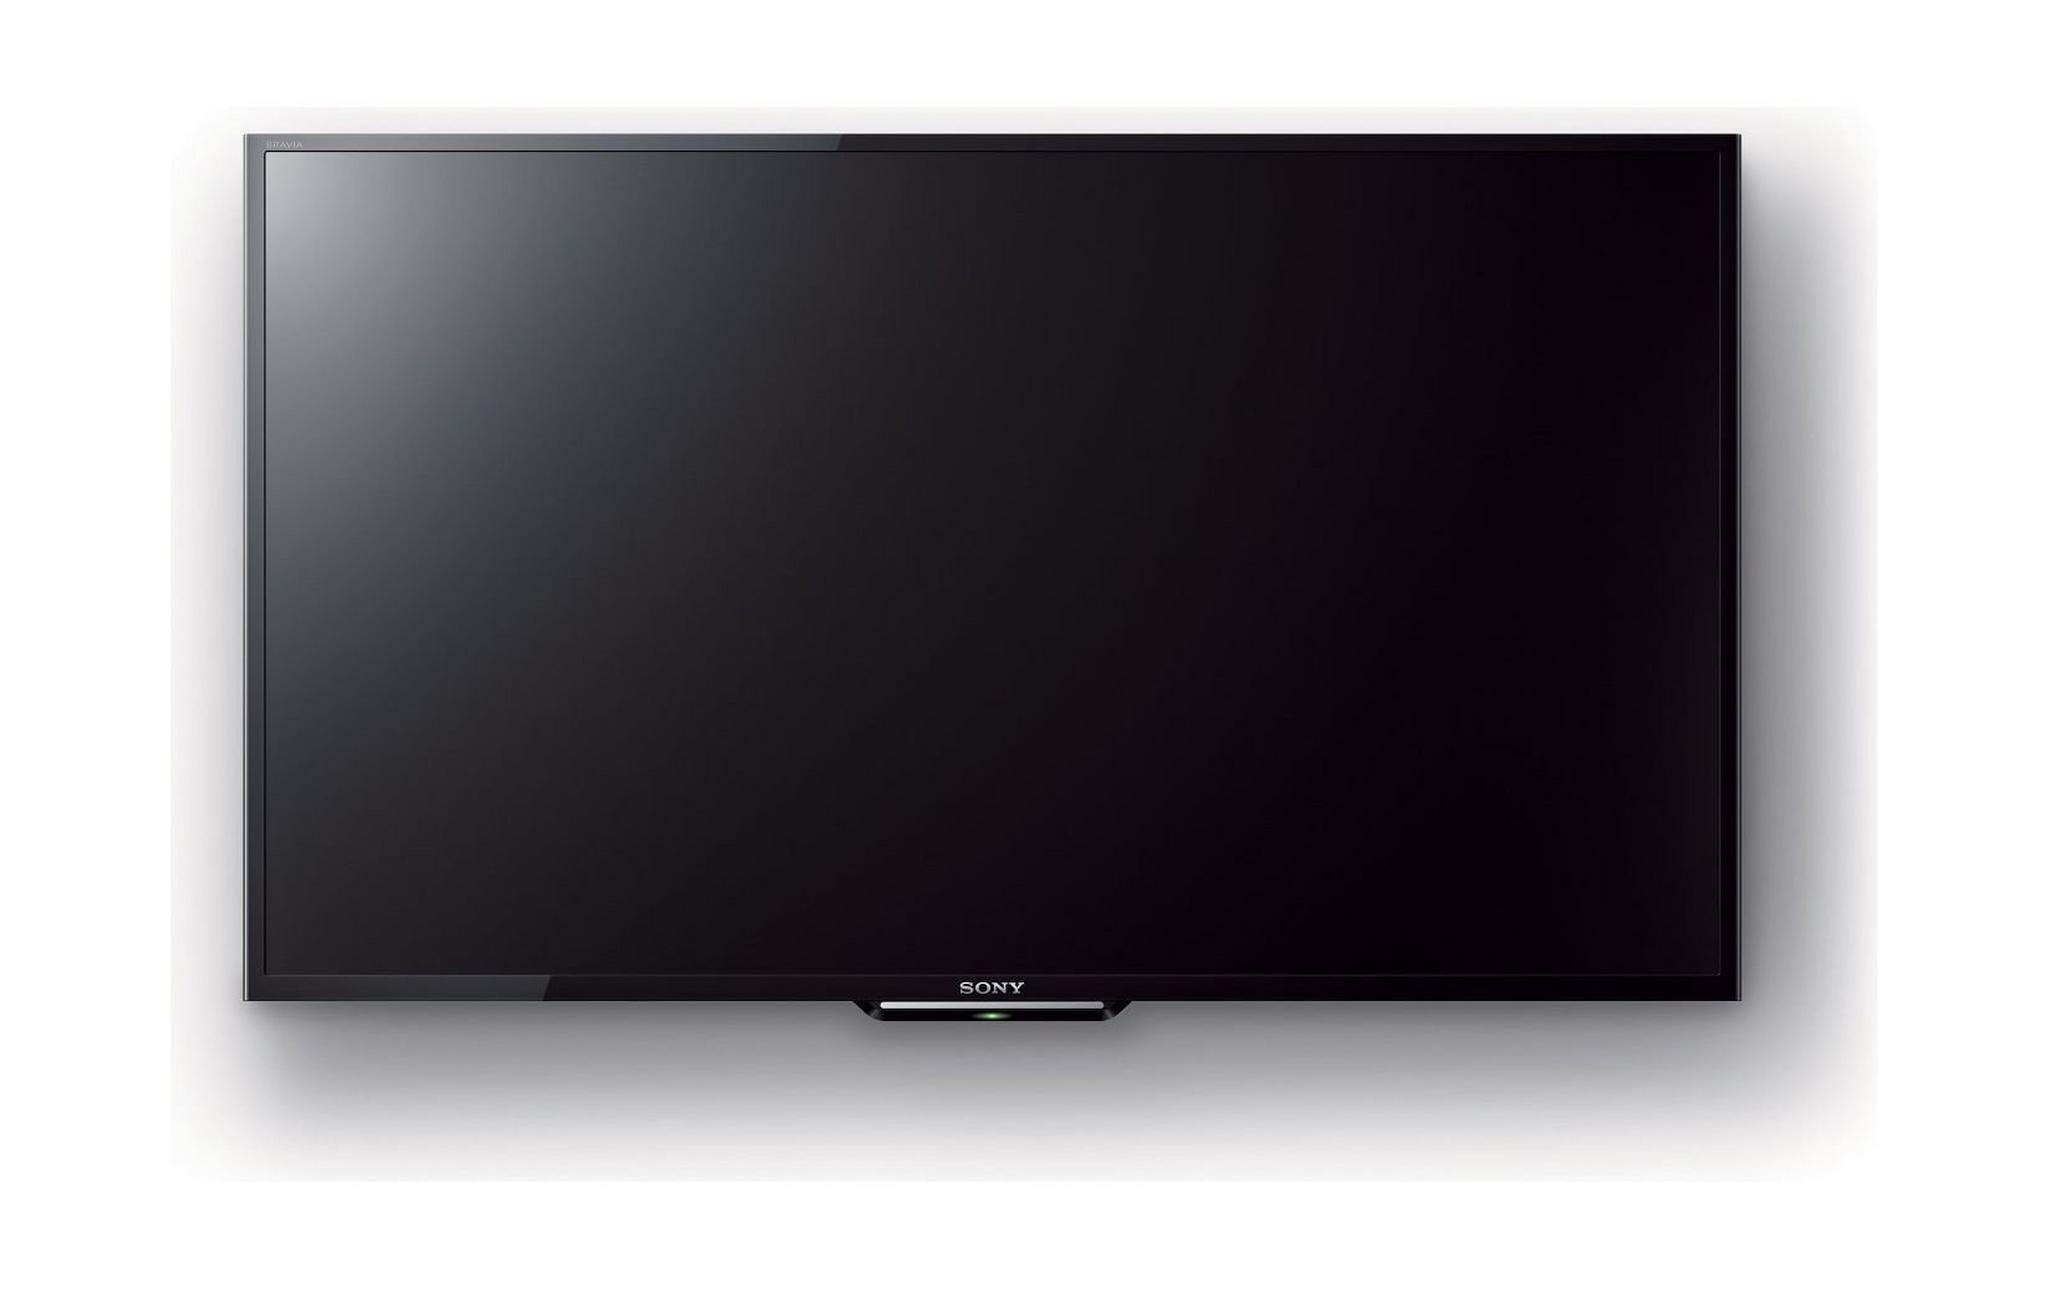 Sony Bravia 40-inch Full HD (1080p) Smart LED TV - KLV-40R562C